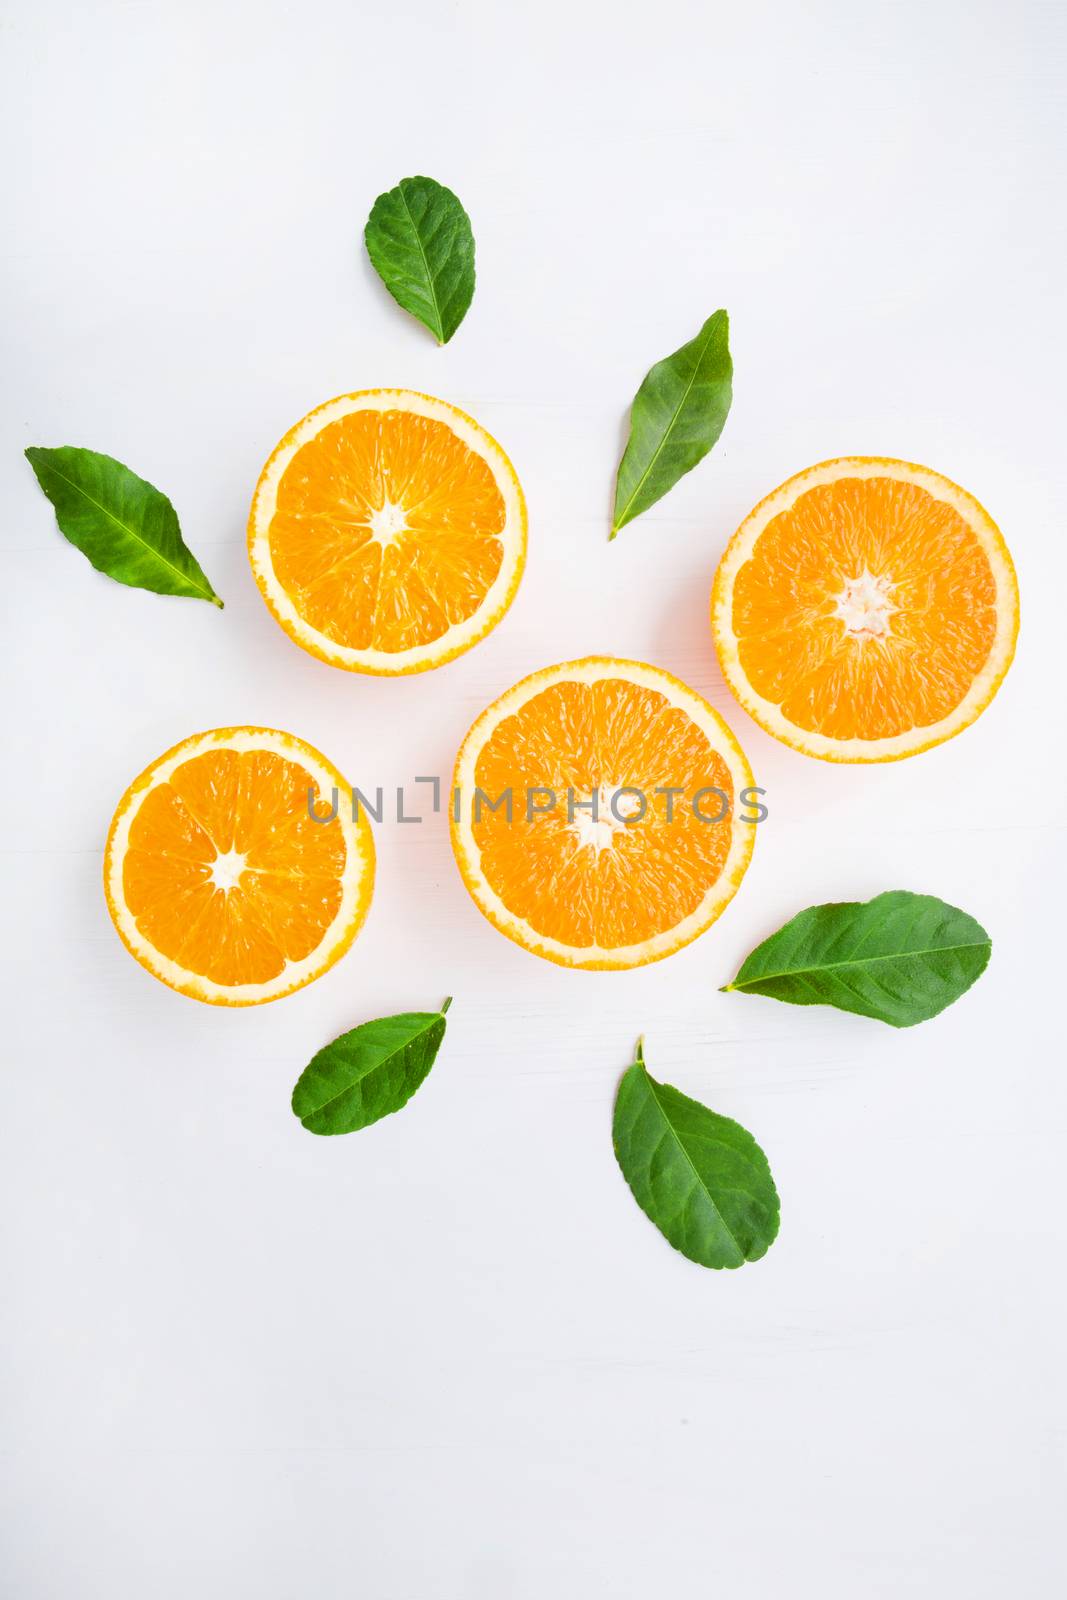 Fresh orange citrus fruit on white background. Top view by Bowonpat